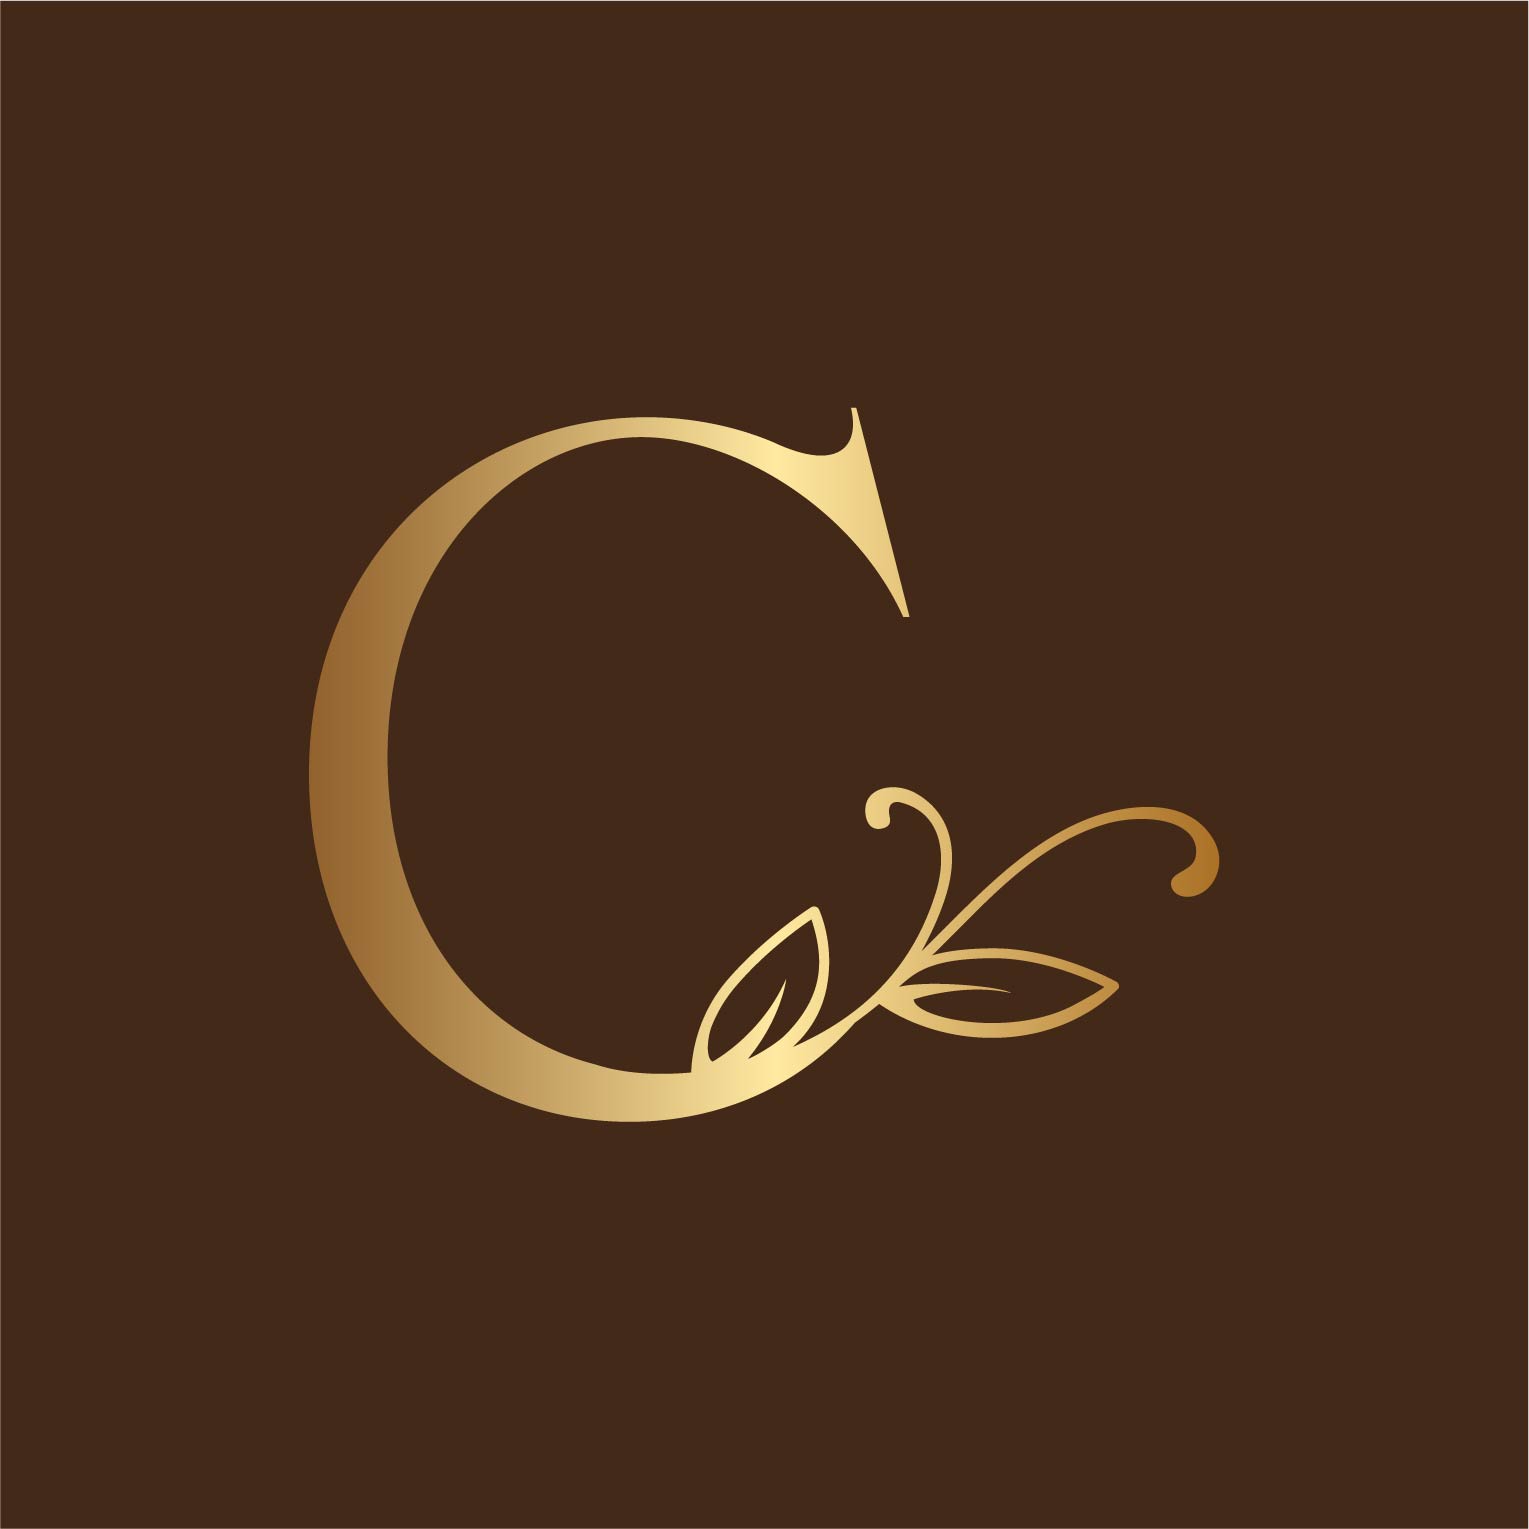 Floral Logo Design Letter C with brown background.